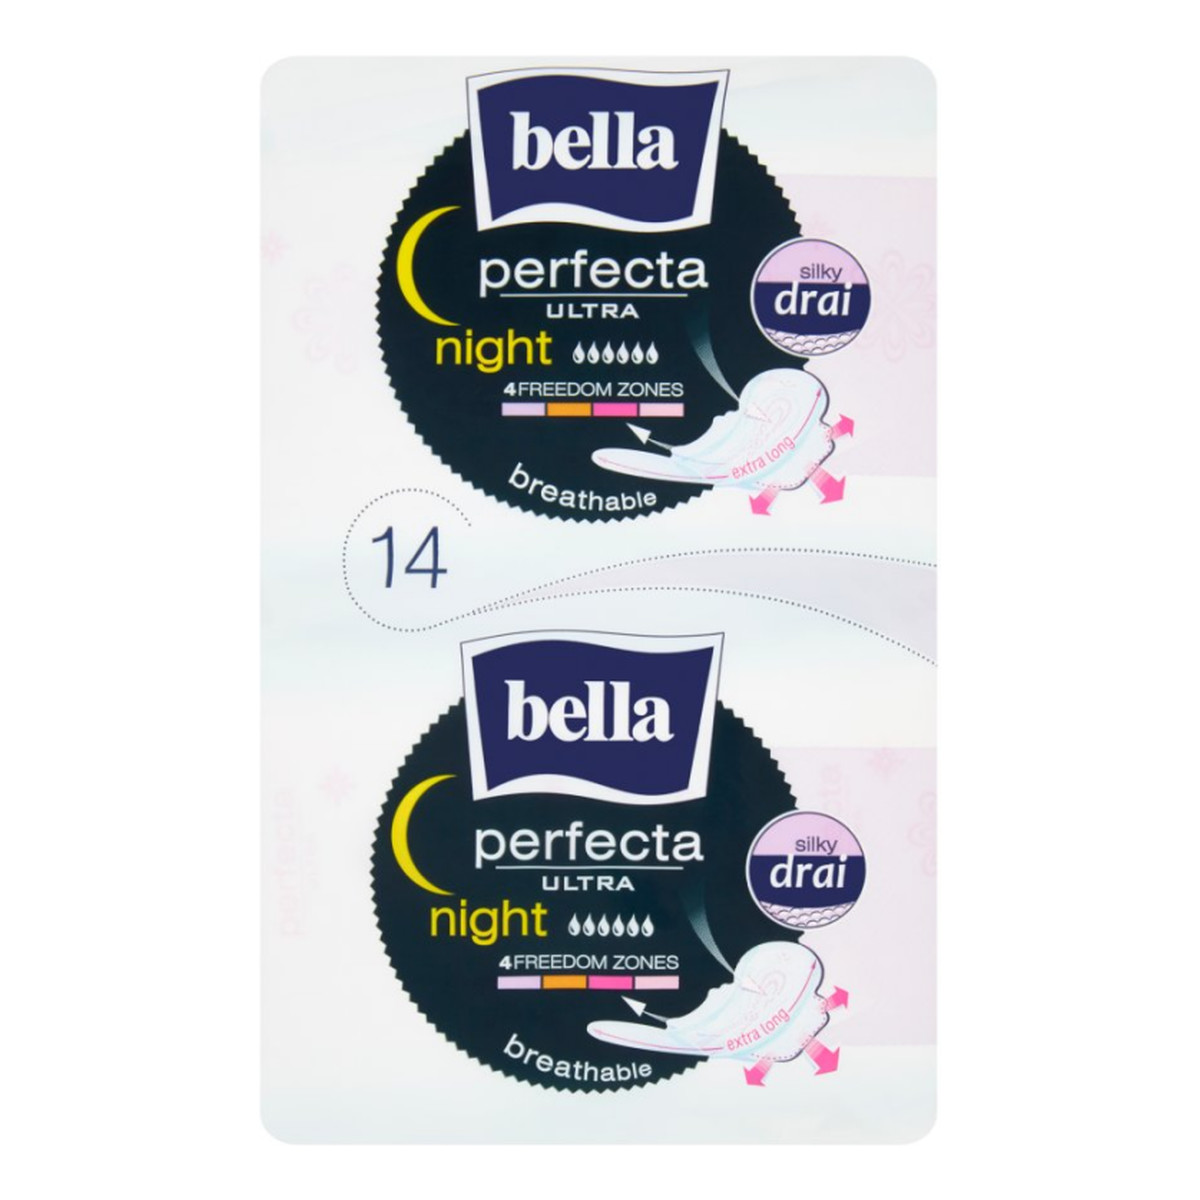 Bella Perfecta Ultra Night Silky Drai Podpaski higieniczne 14 sztuk